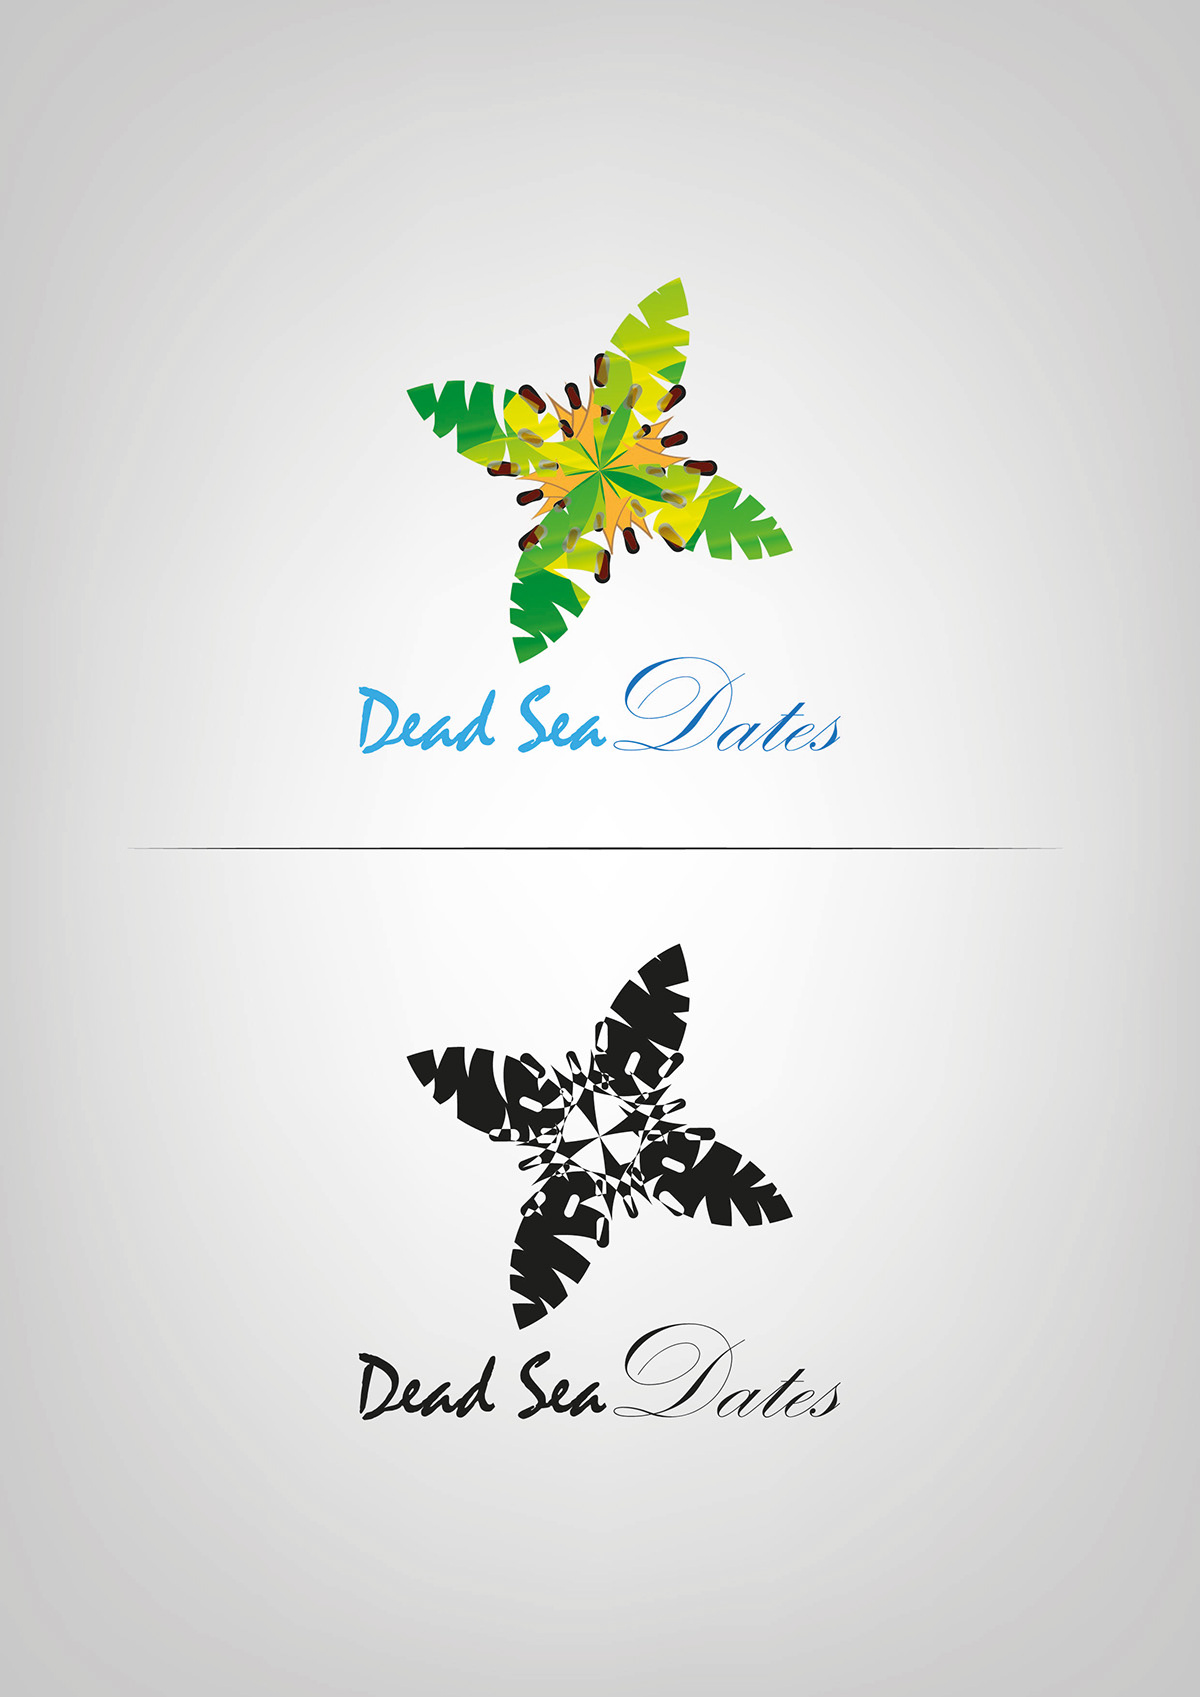 jordan dates logo dead sea